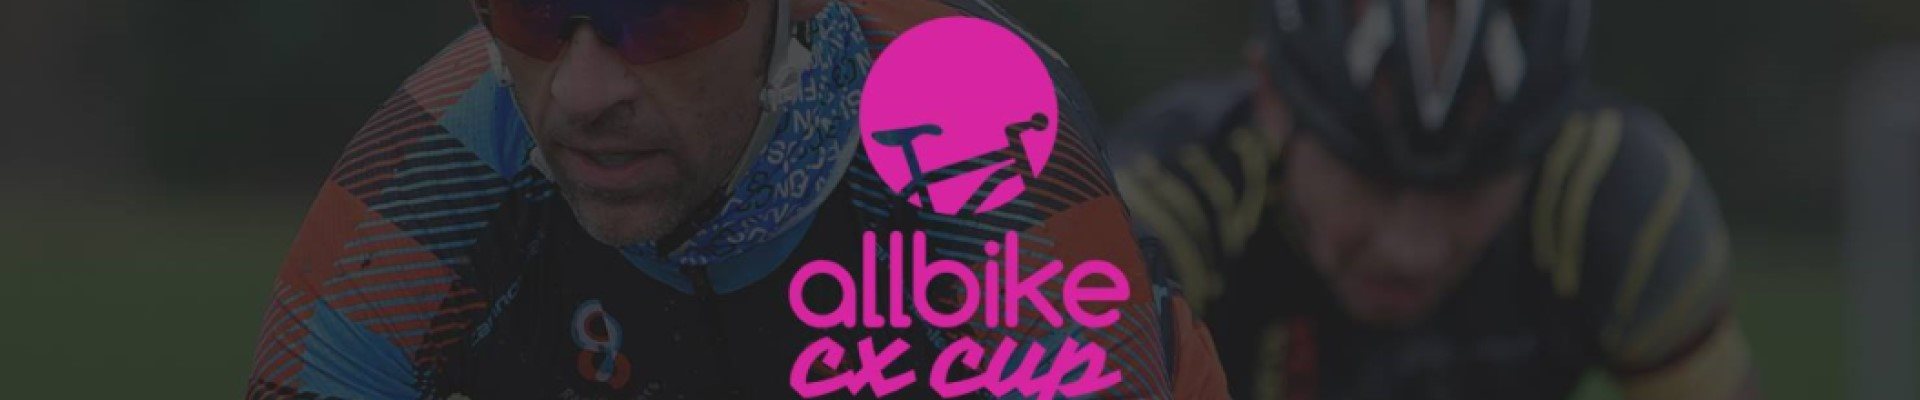 Allbike CX cup 19/20 #4 (Viborg)